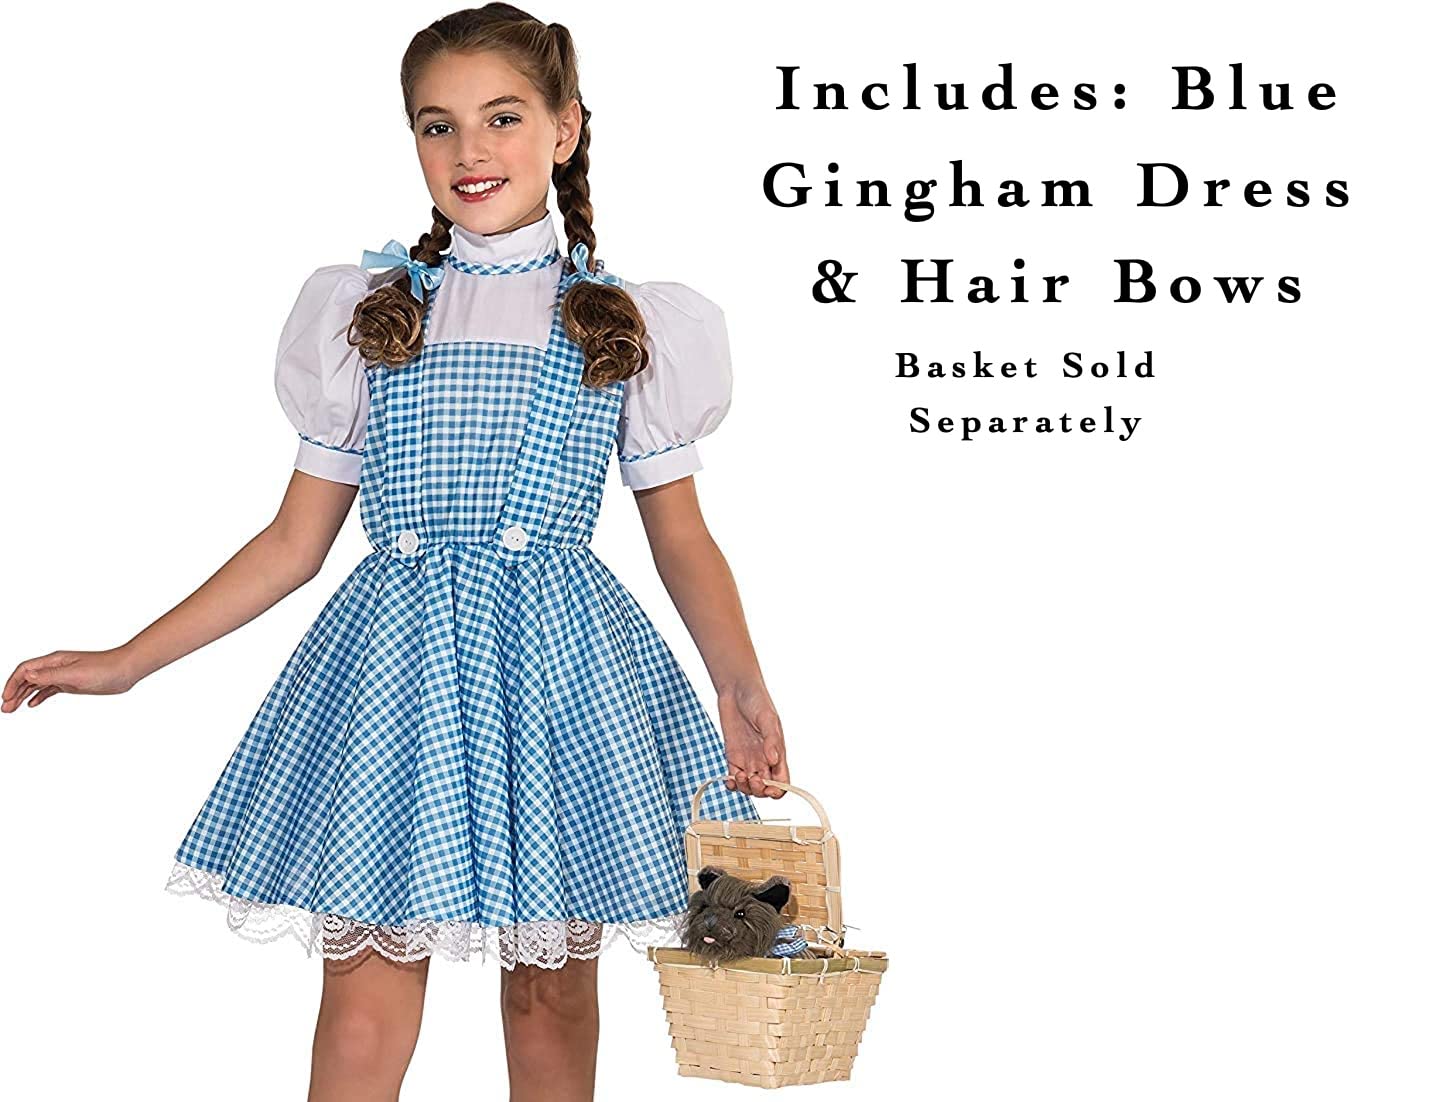 Child's Wizard of Oz Deluxe Dorothy Costume